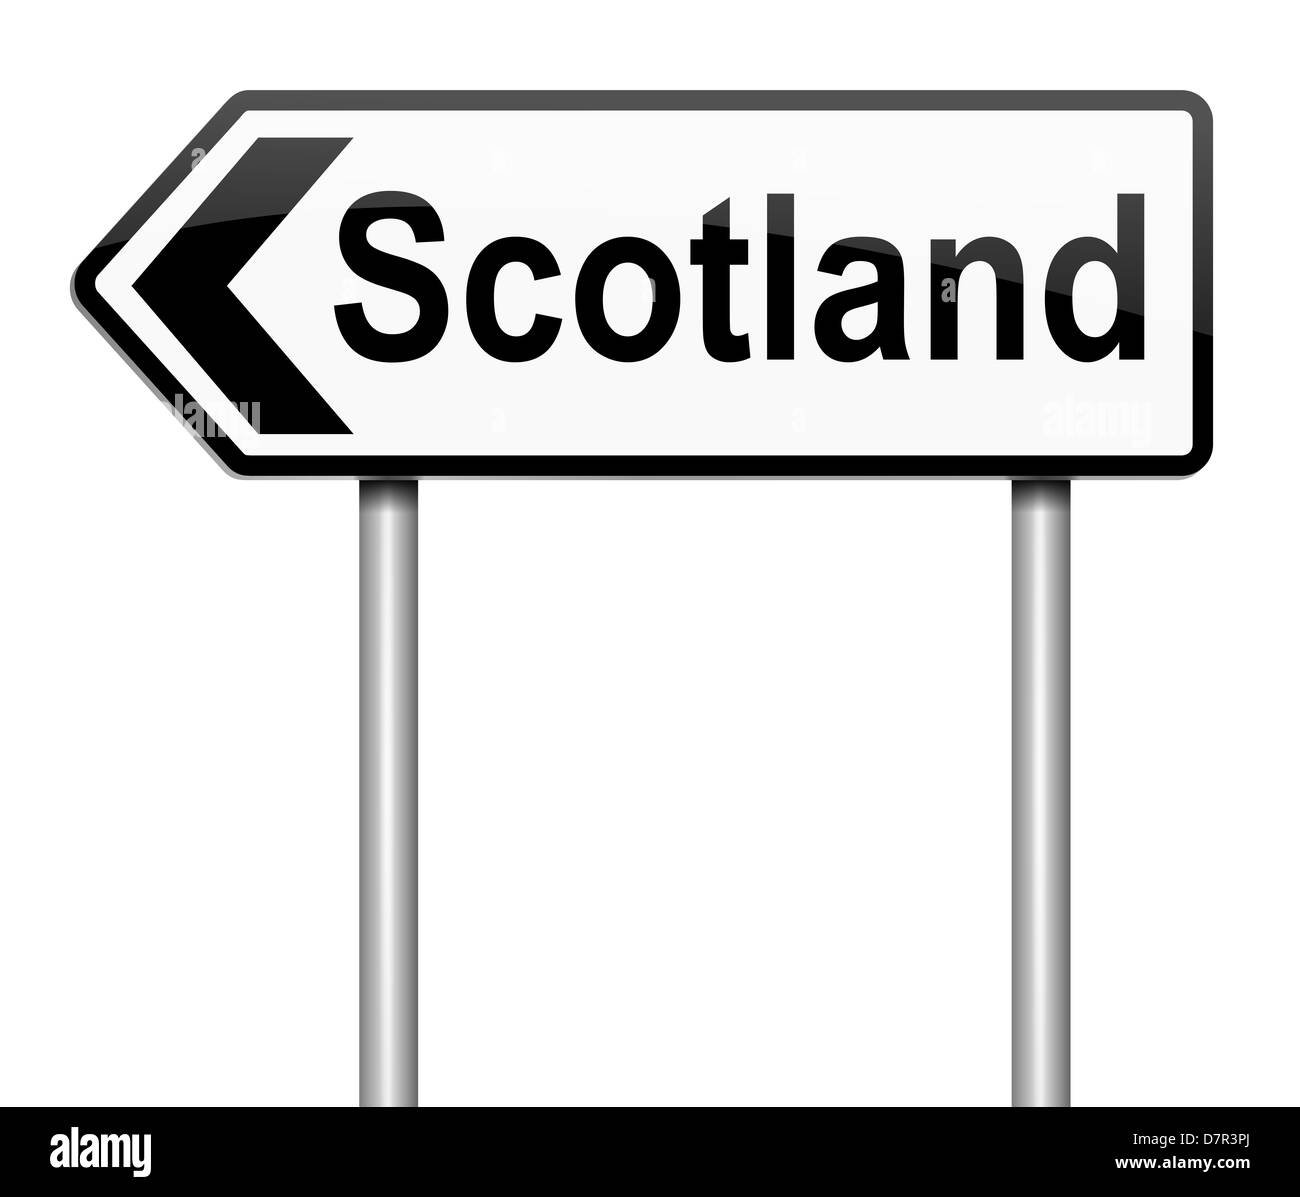 Scotland sign. Stock Photo